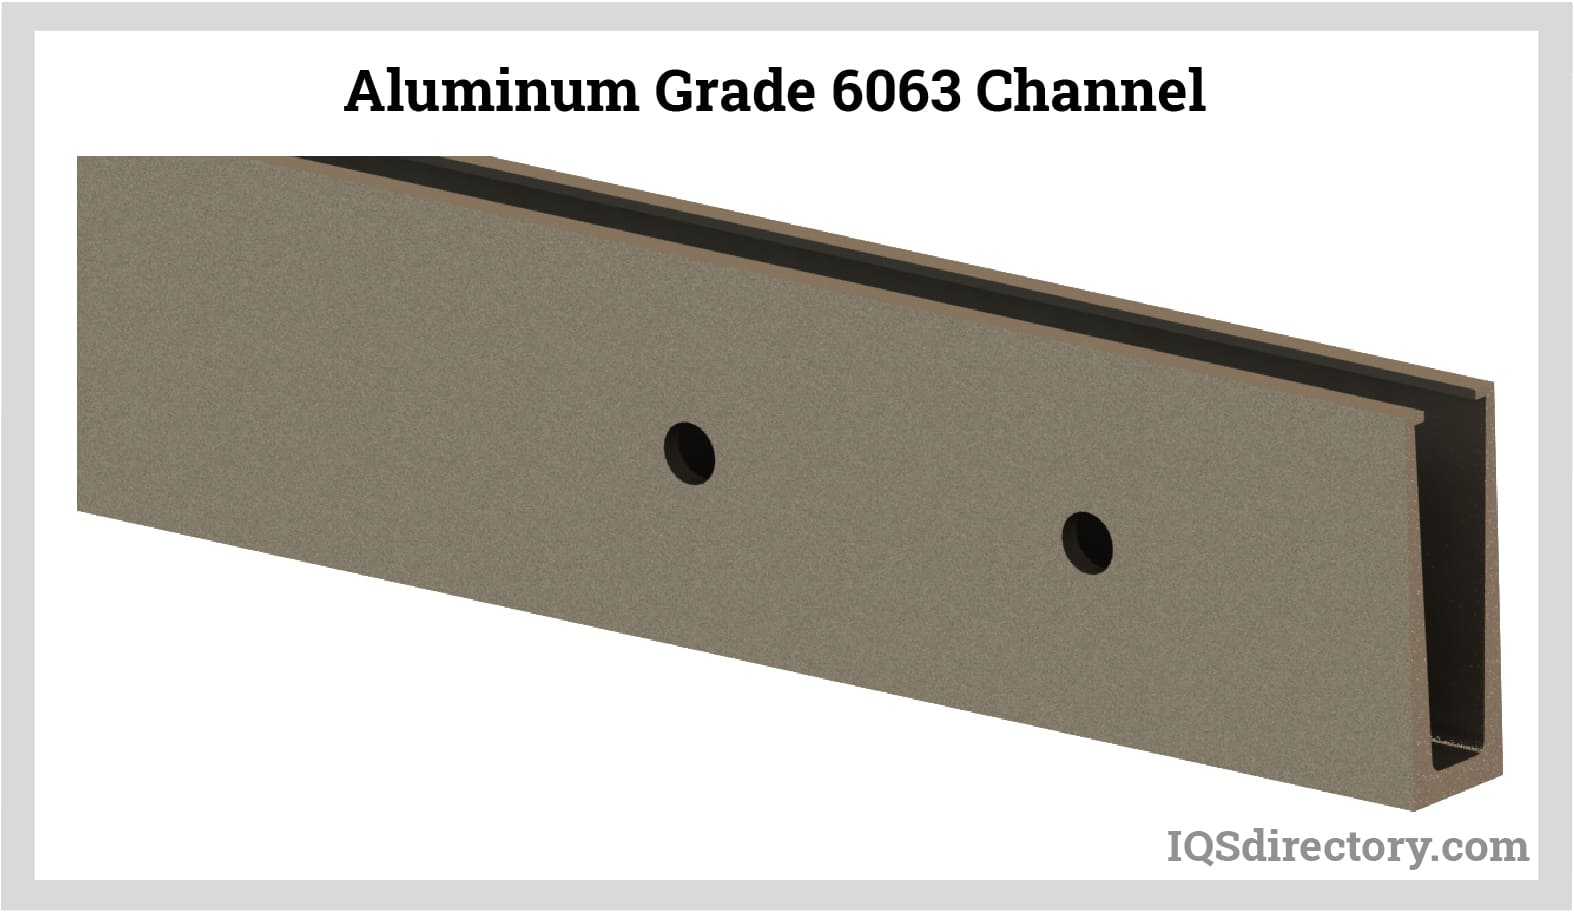 Aluminum Grade 6063 Channel